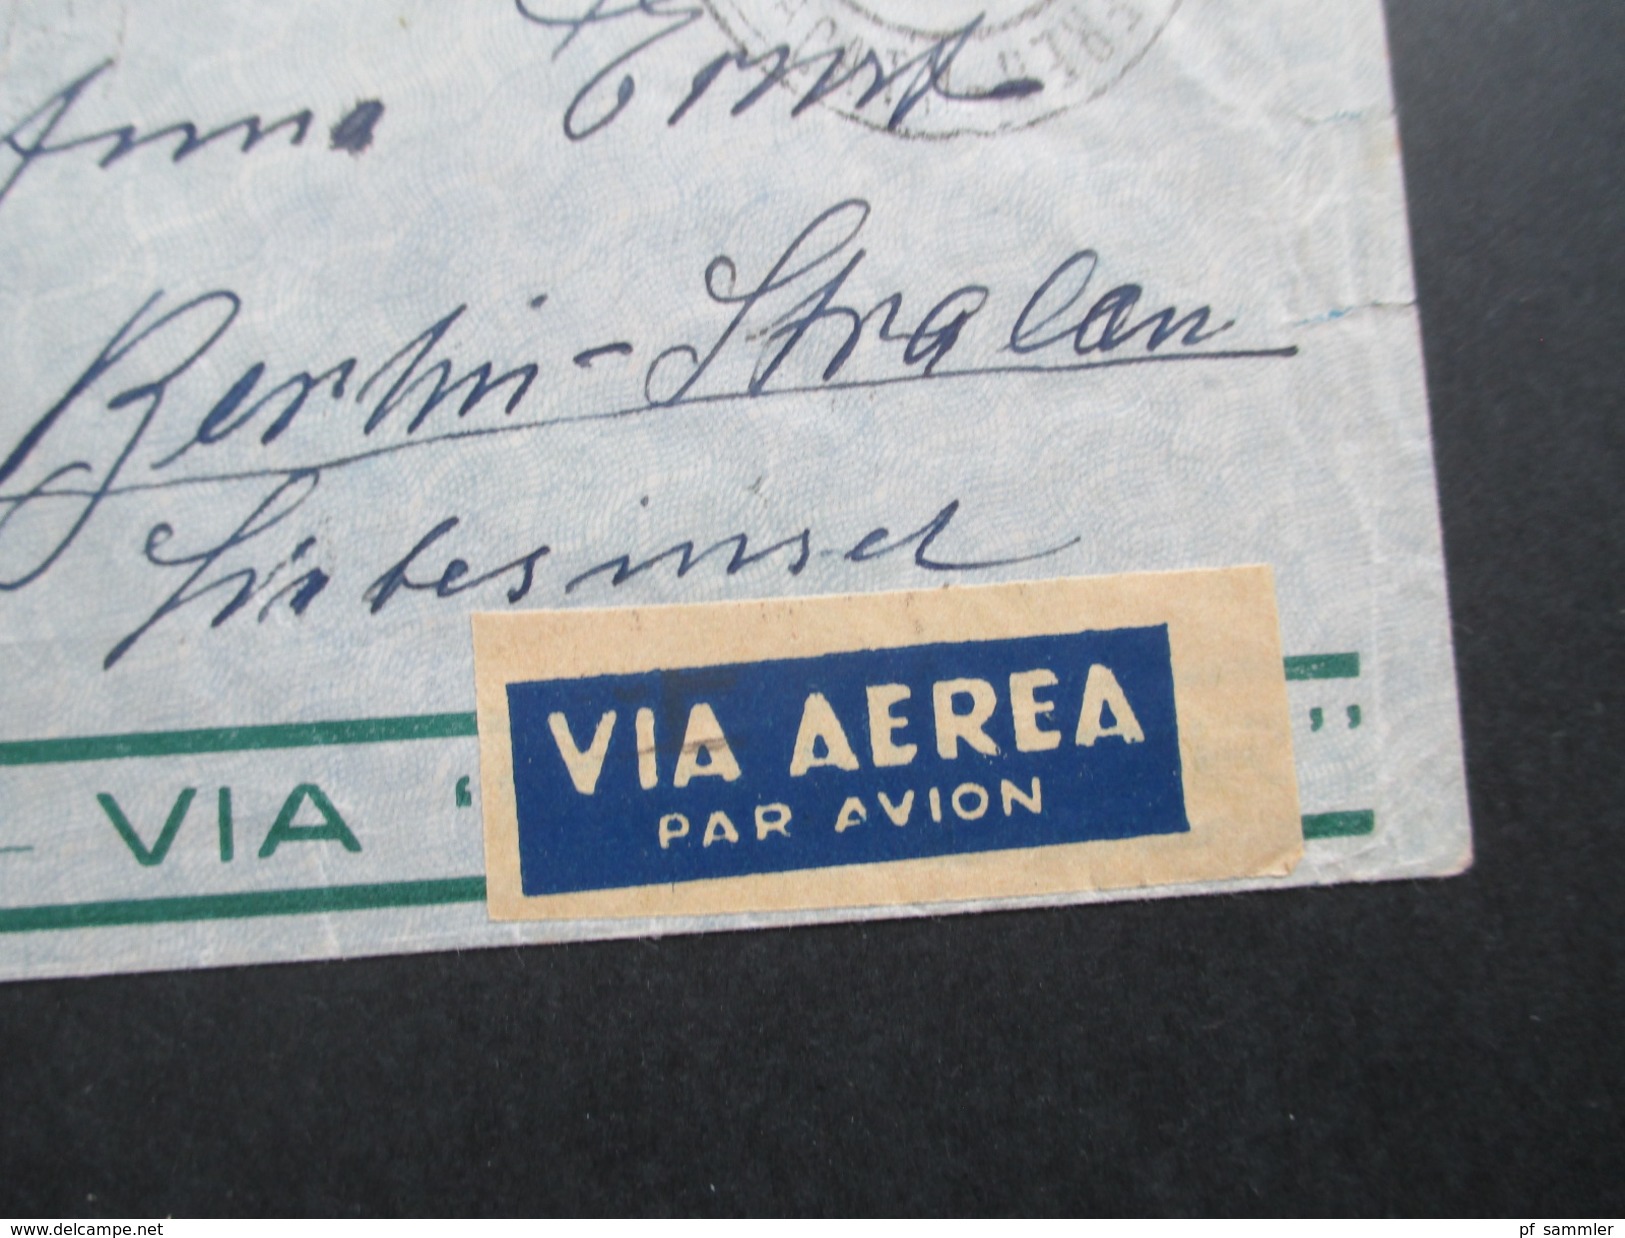 Brasilien 1935 Luftpost / Flugpost Via Condor. Nach Berlin über Paris R.P. Avion. Zeppelinpost?? - Storia Postale